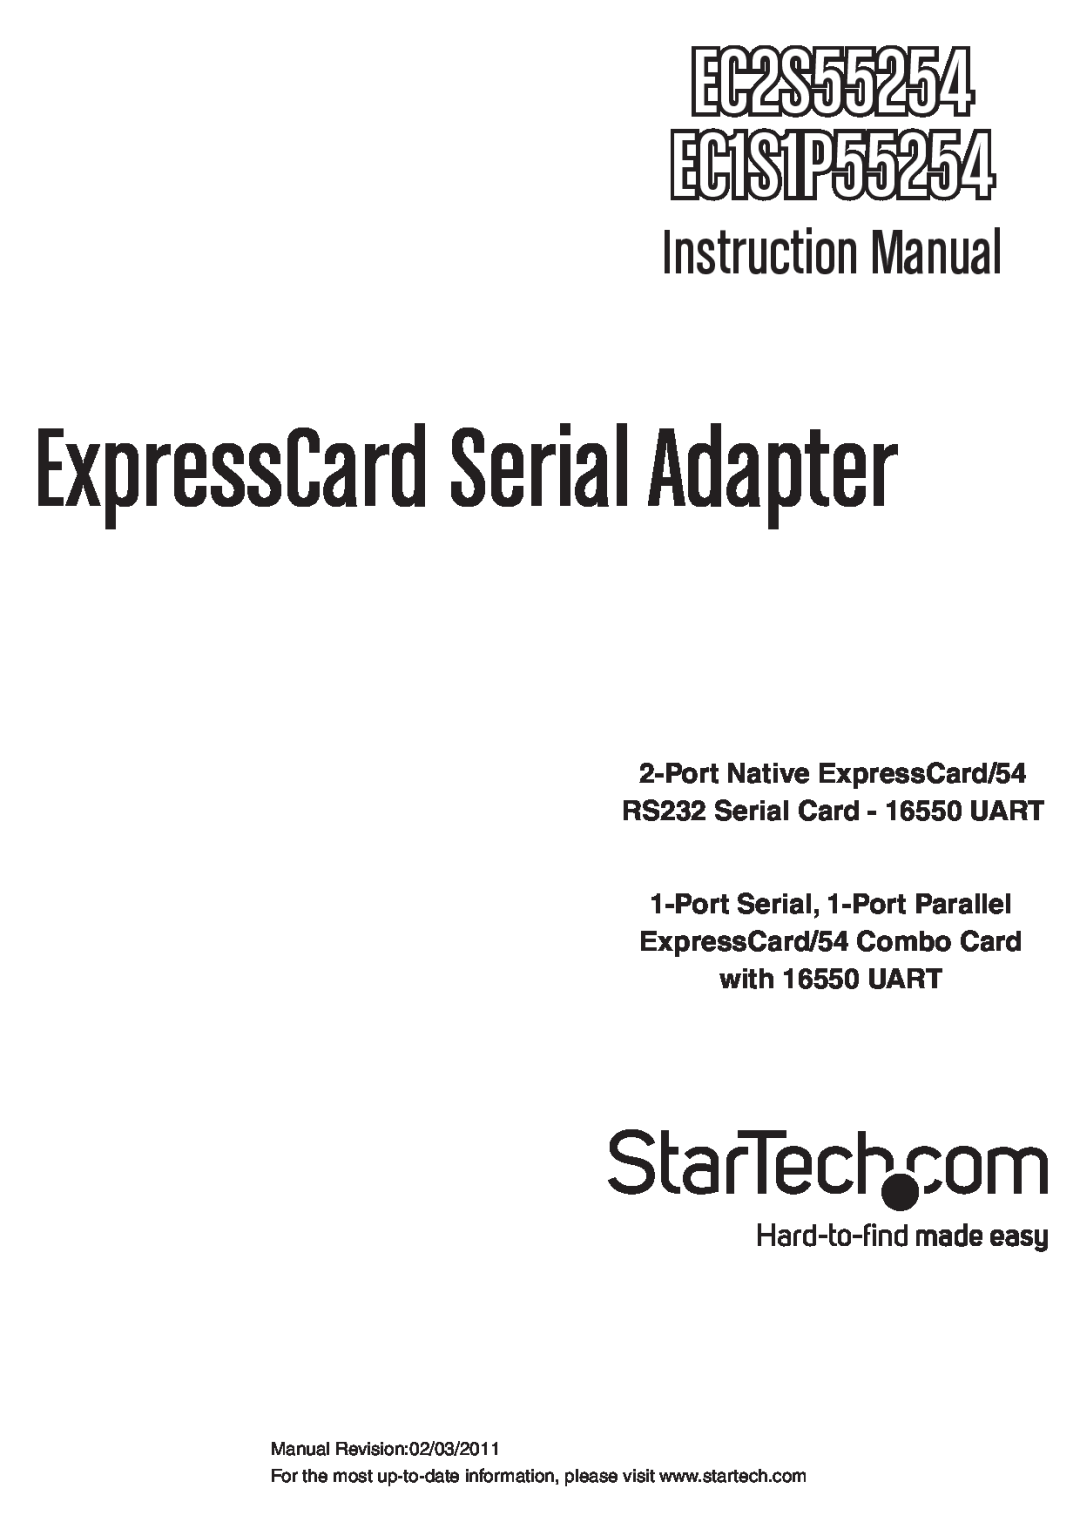 StarTech.com EC1S1P55254 instruction manual Port Native ExpressCard/54 RS232 Serial Card - 16550 UART, with 16550 UART 